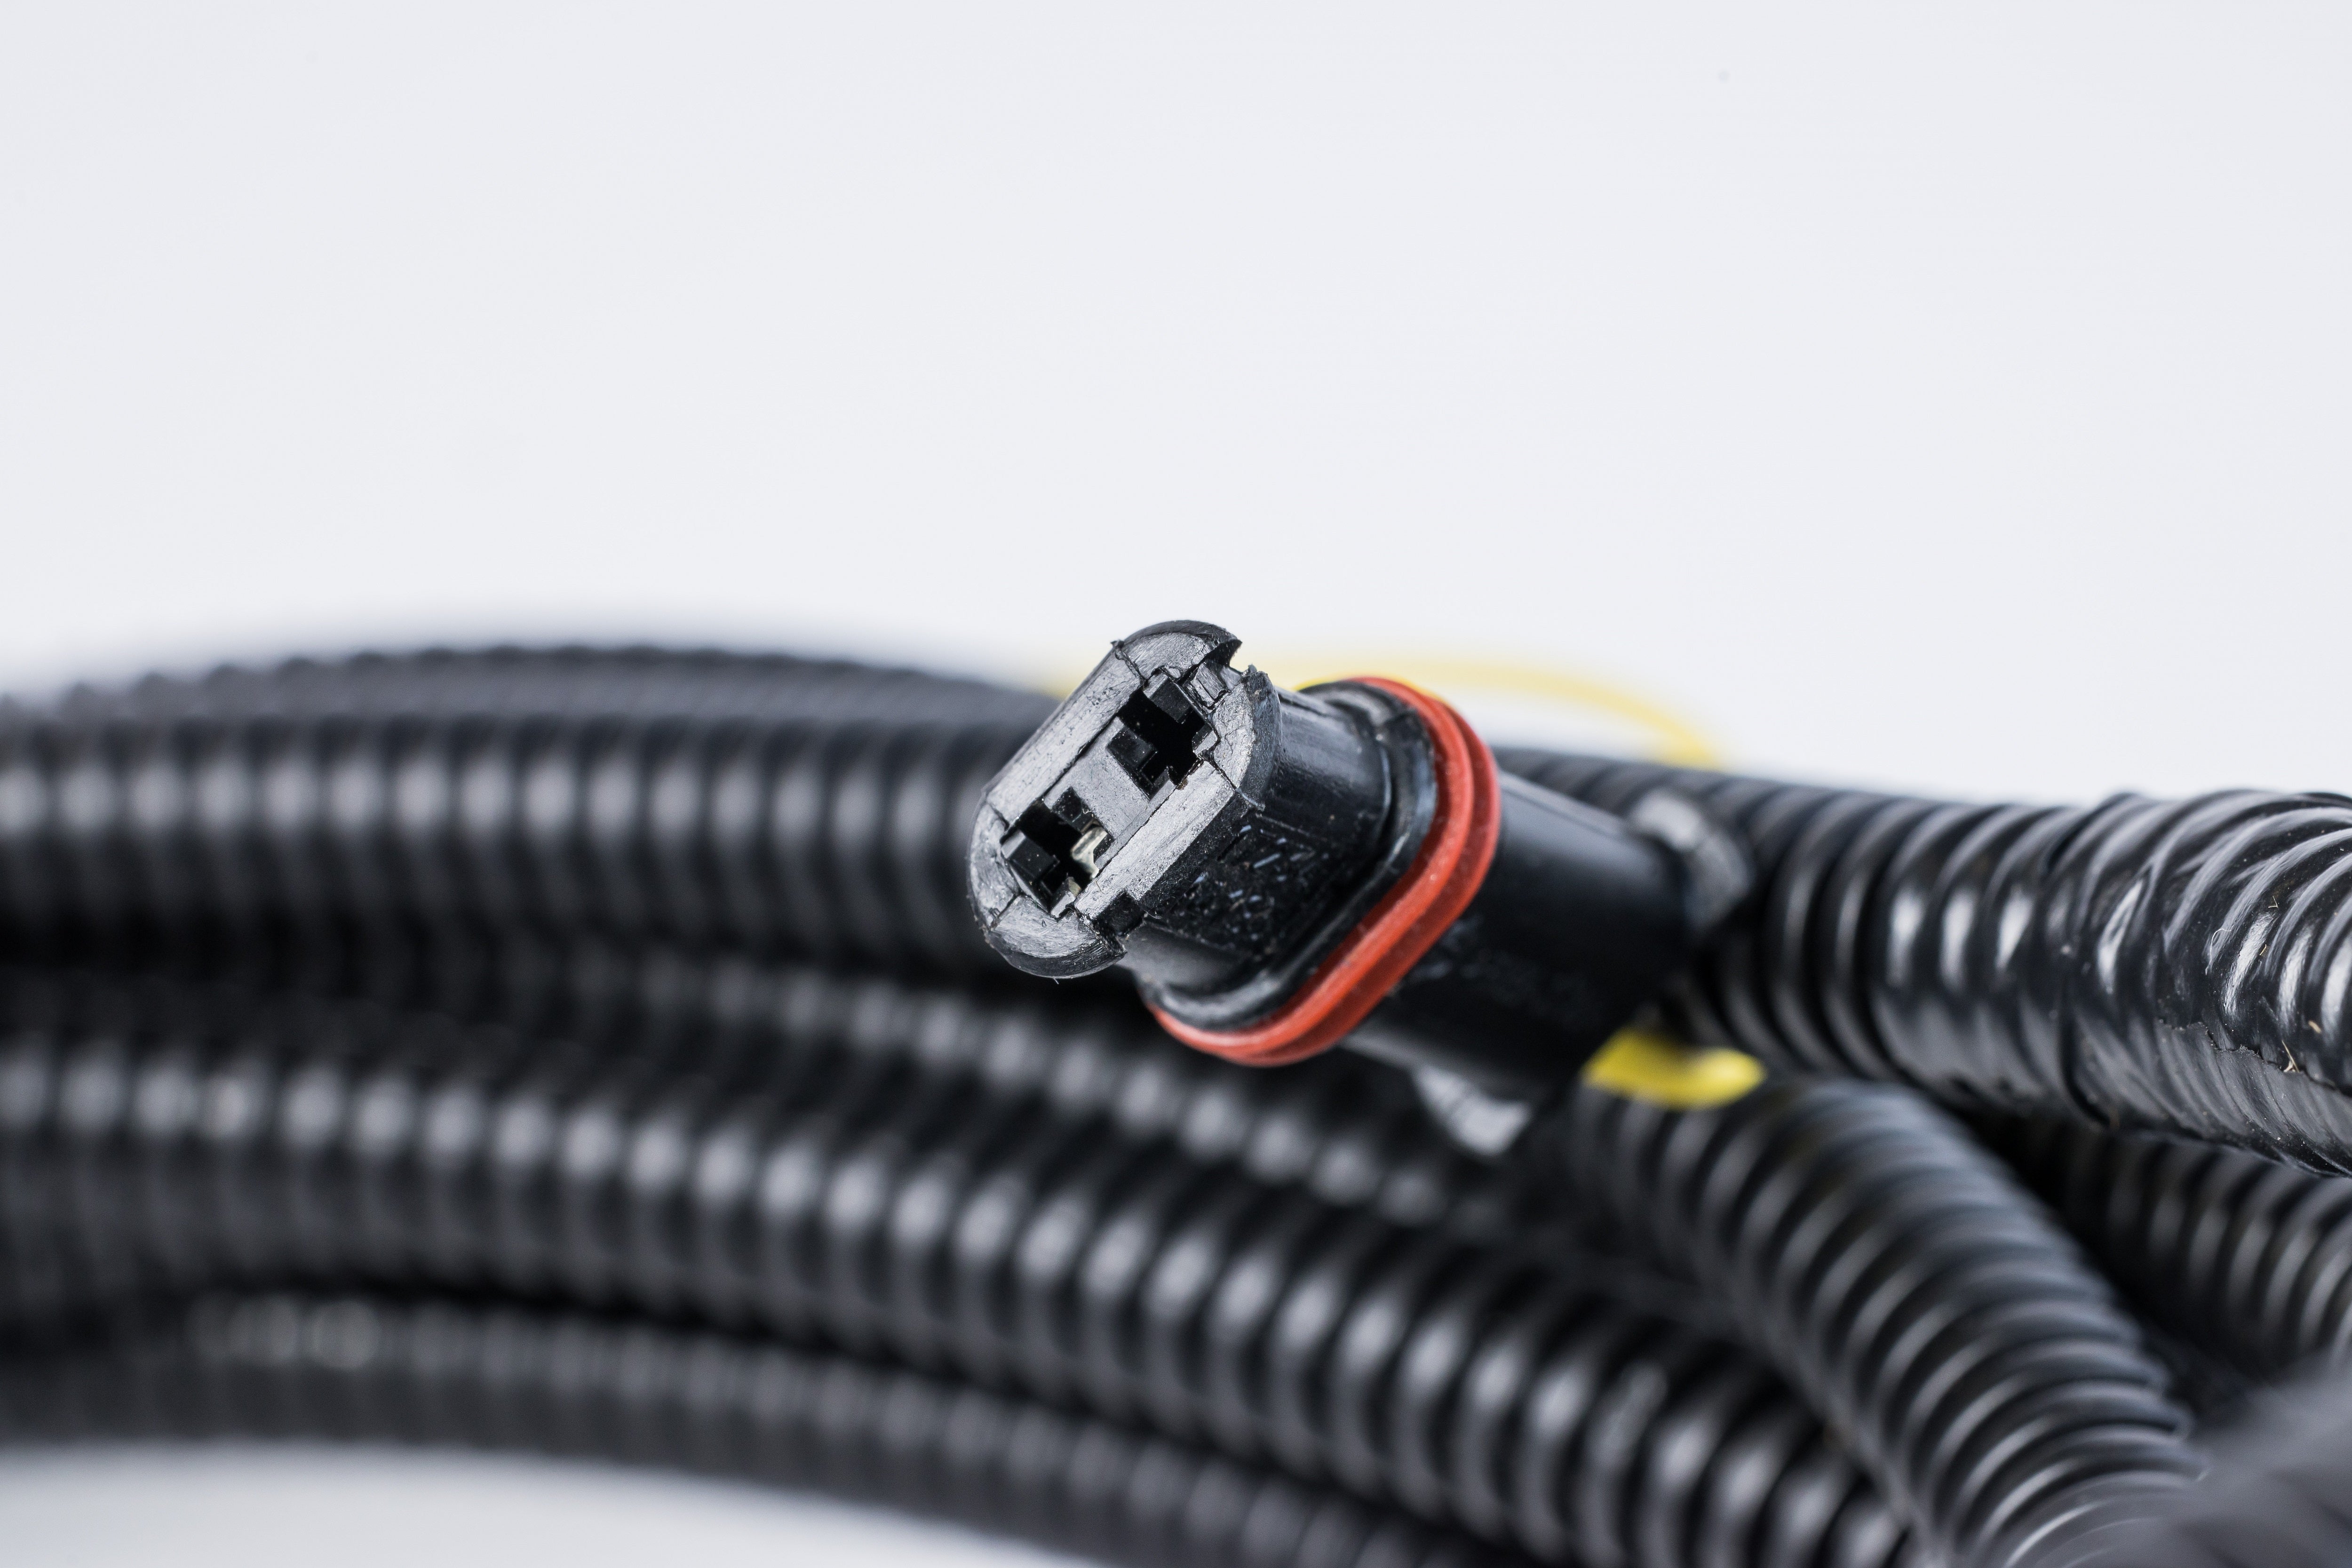 Webasto Wiring Harness Adapter For Smartemp 3.0 Evo40/55 5013930A Heater Part